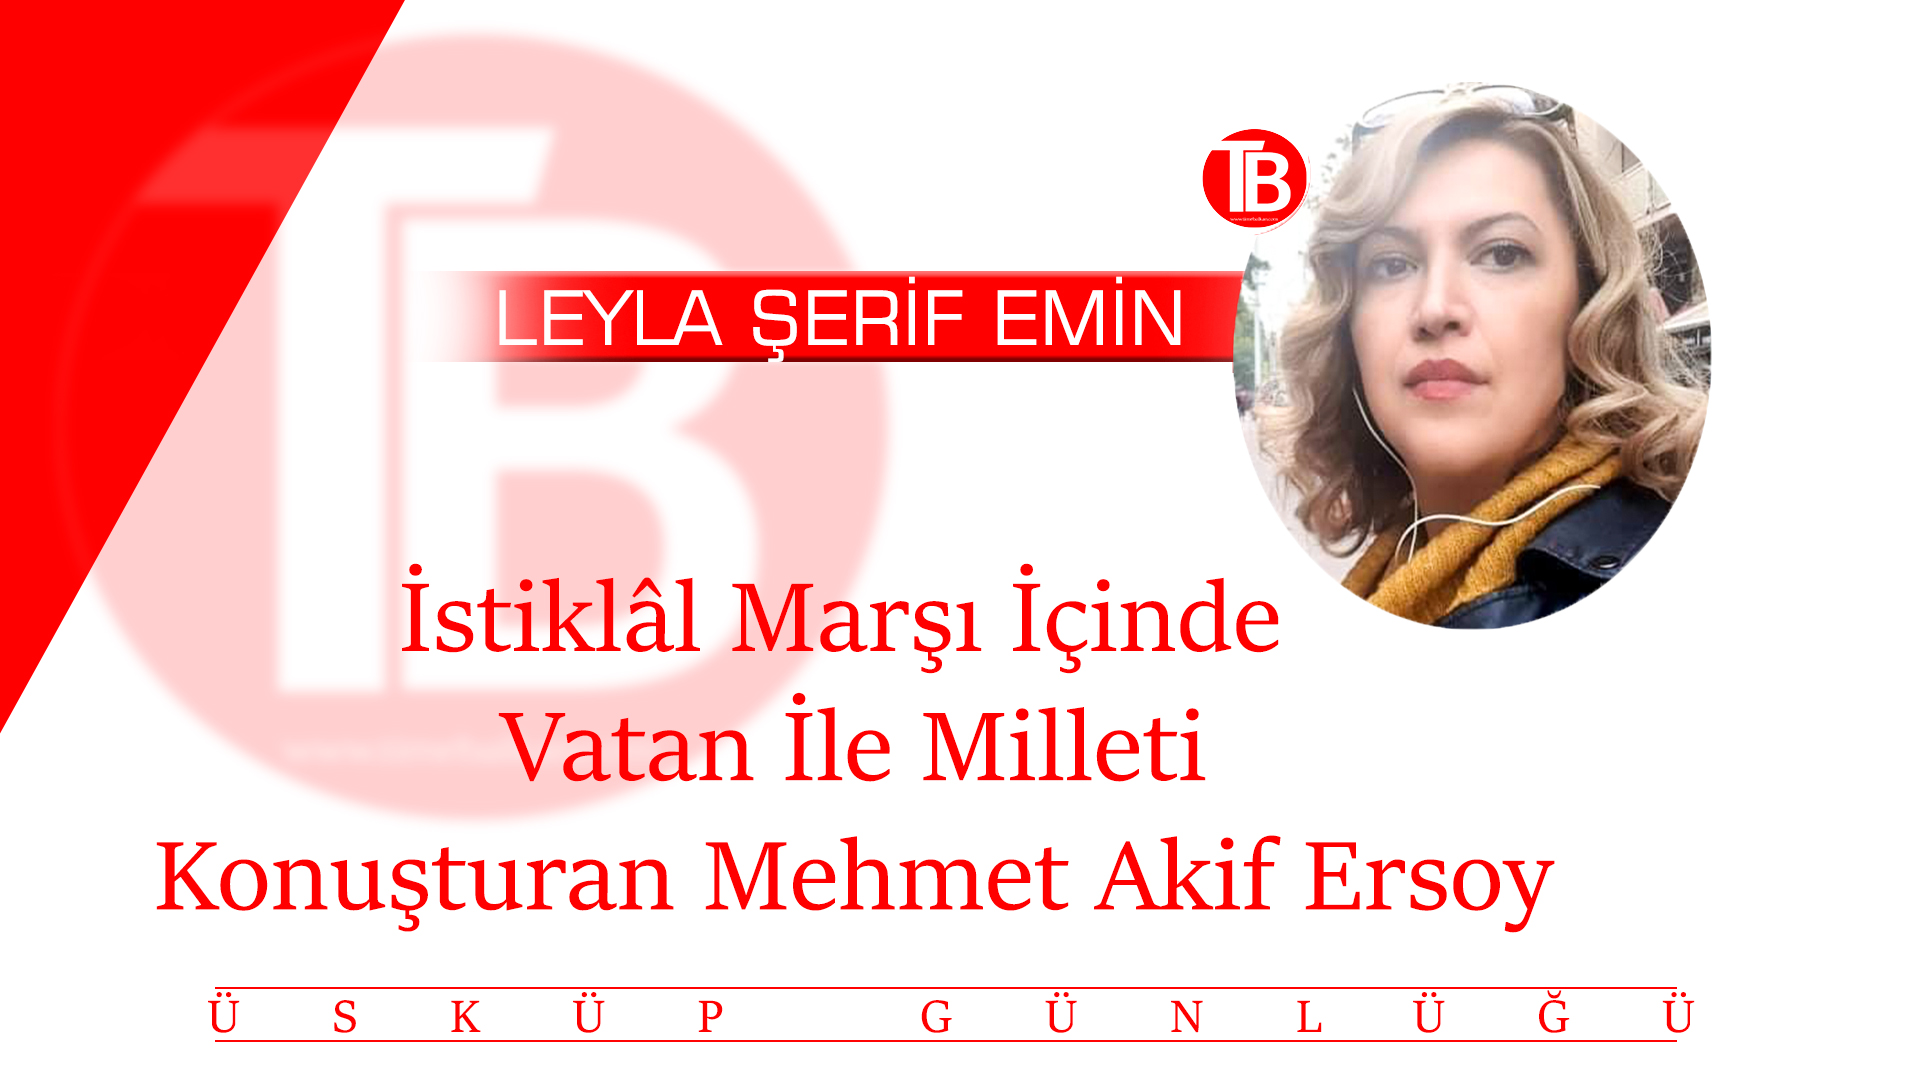 <strong>İstiklâl Marşı İçinde Vatan İle Milleti Konuşturan Mehmet Akif Ersoy</strong>